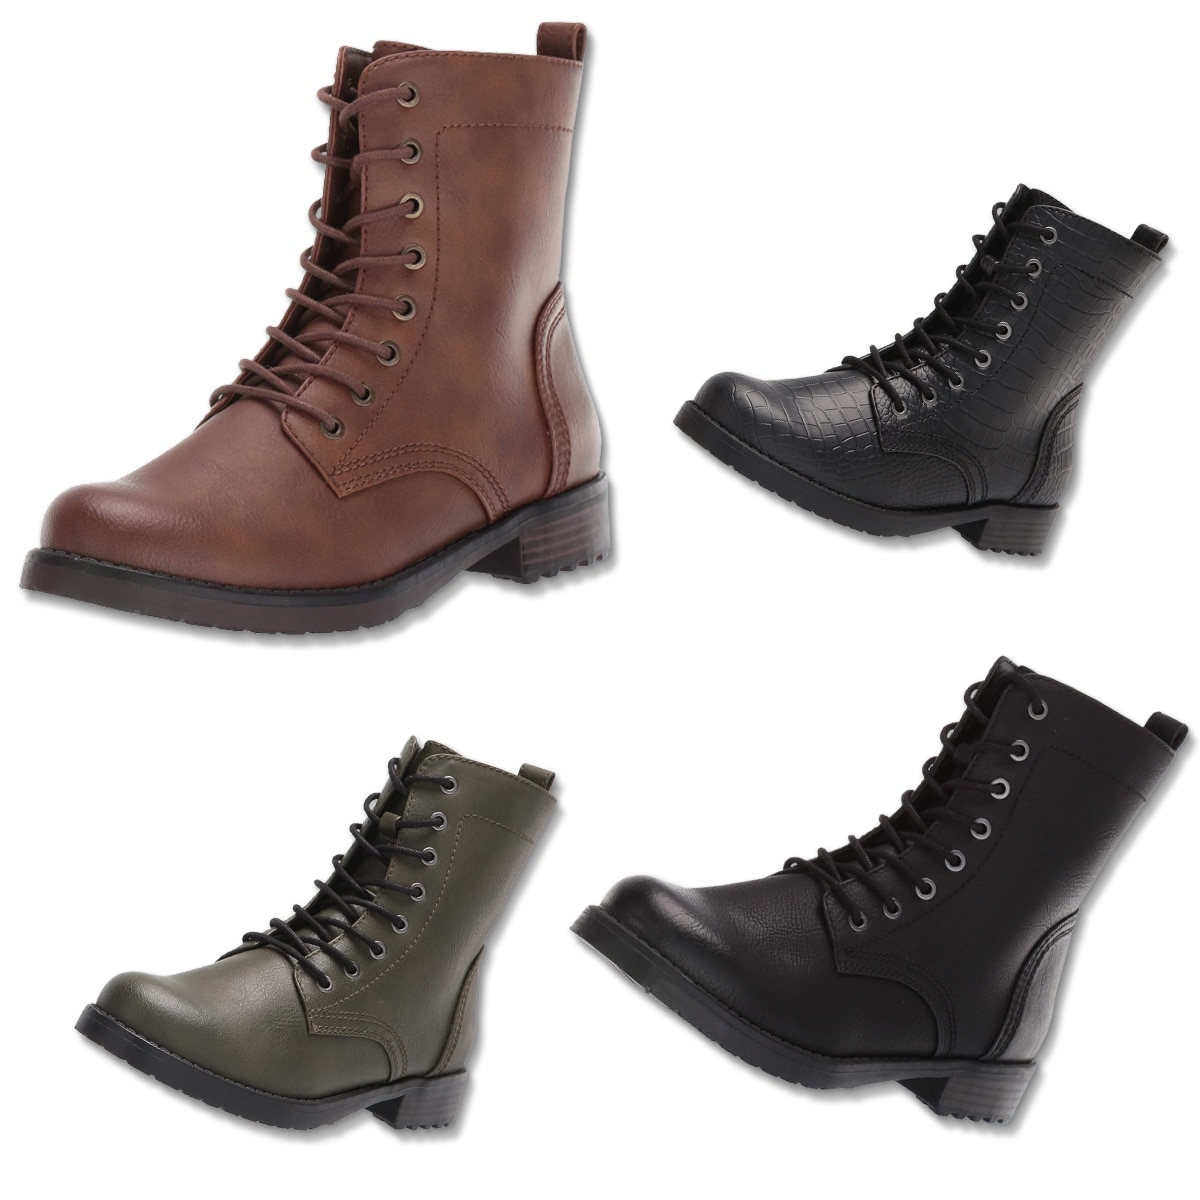 GBG Los Angeles Jaydyn Combat Boot | Combat boots, Boots, Boots women  fashion